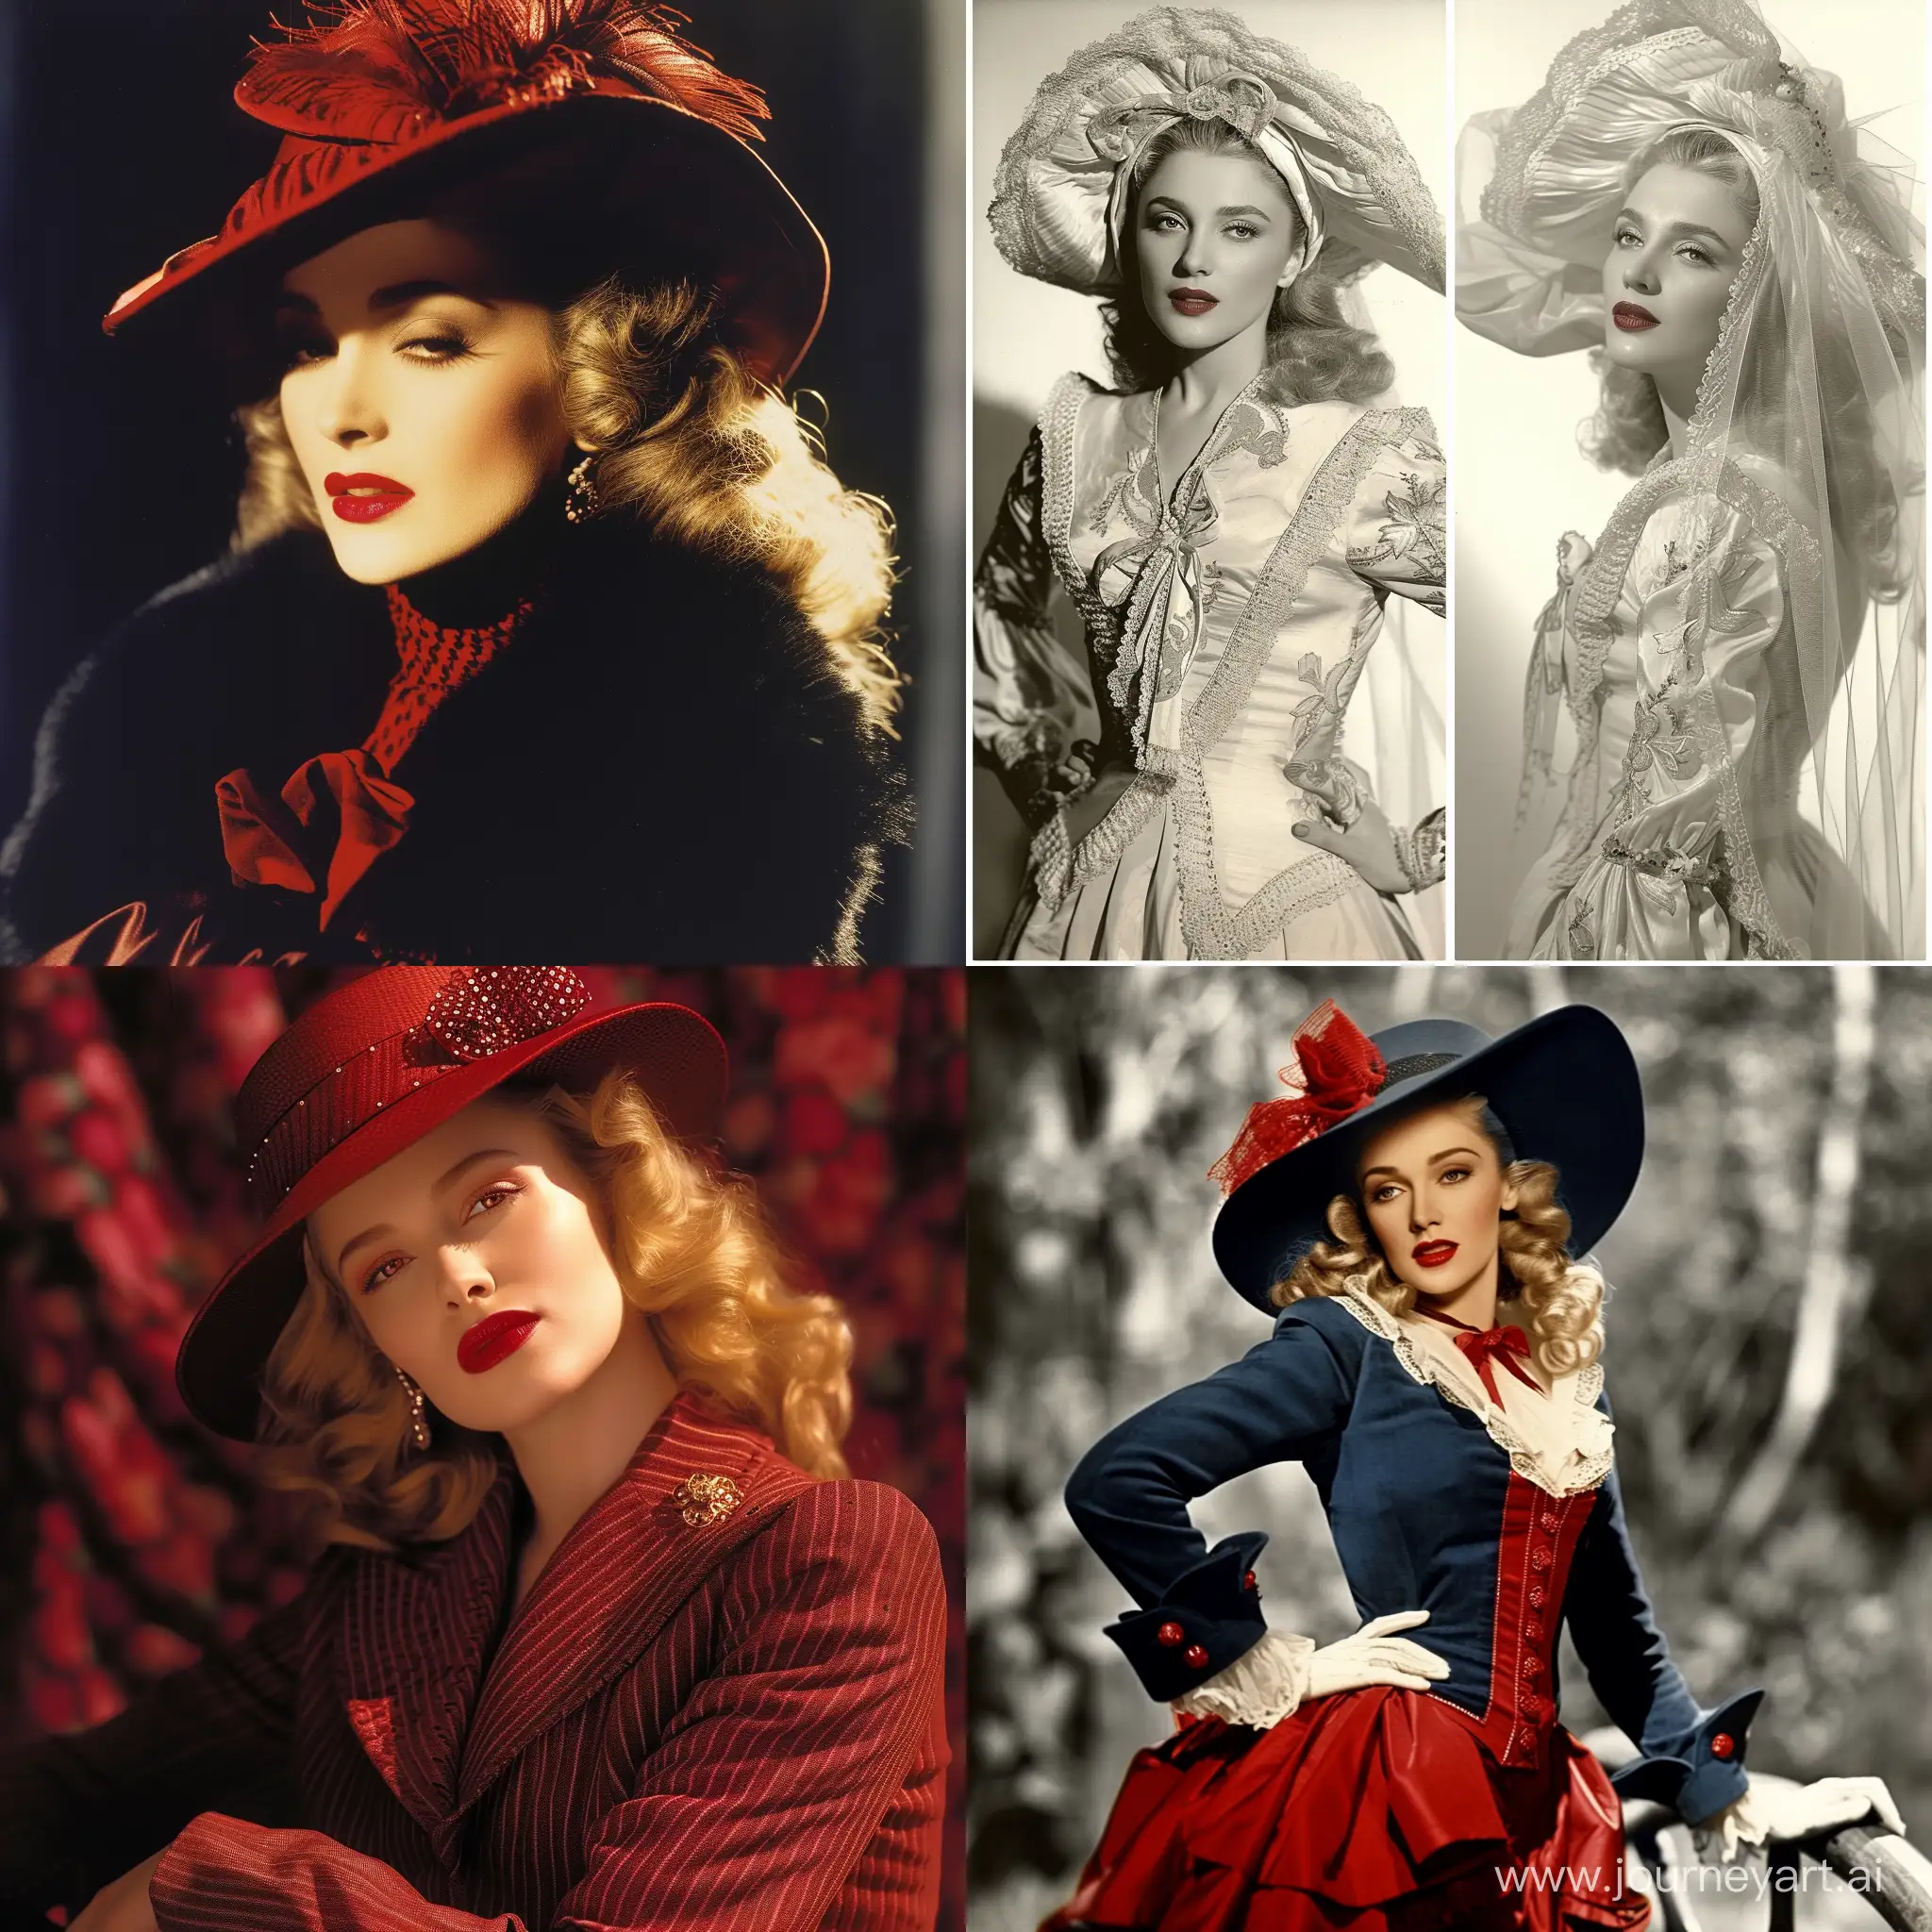 Madonna 1940s french attire